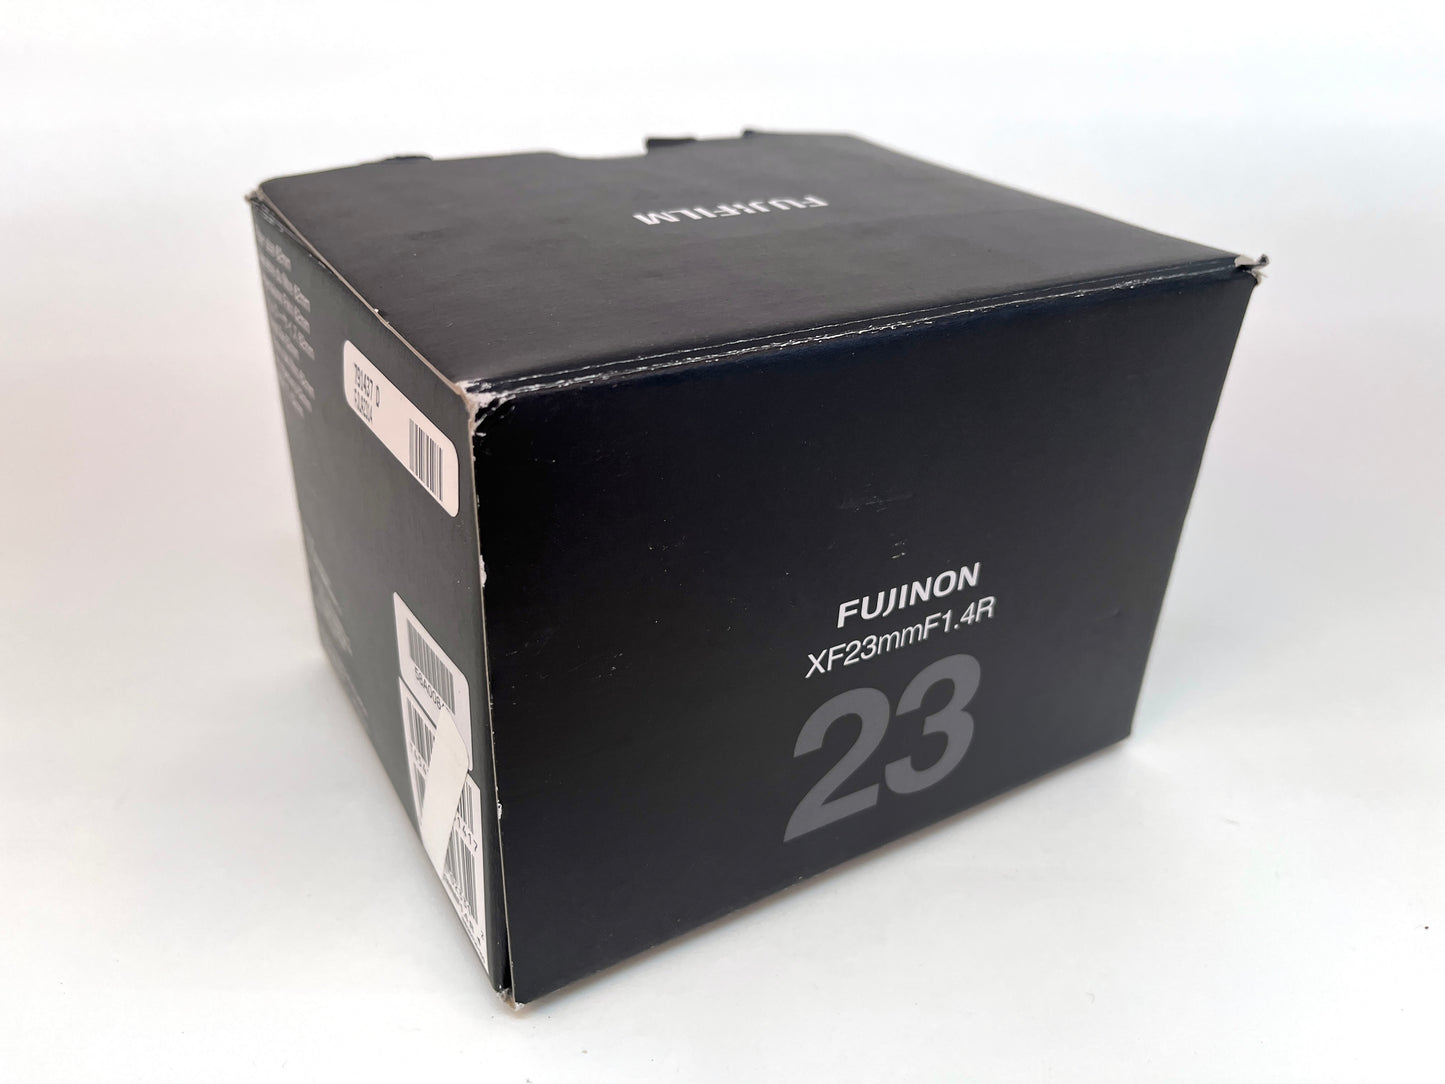 Fujinon Fujifilm XF 23mm f/1.4 R Prime Lens Boxed Near Mint